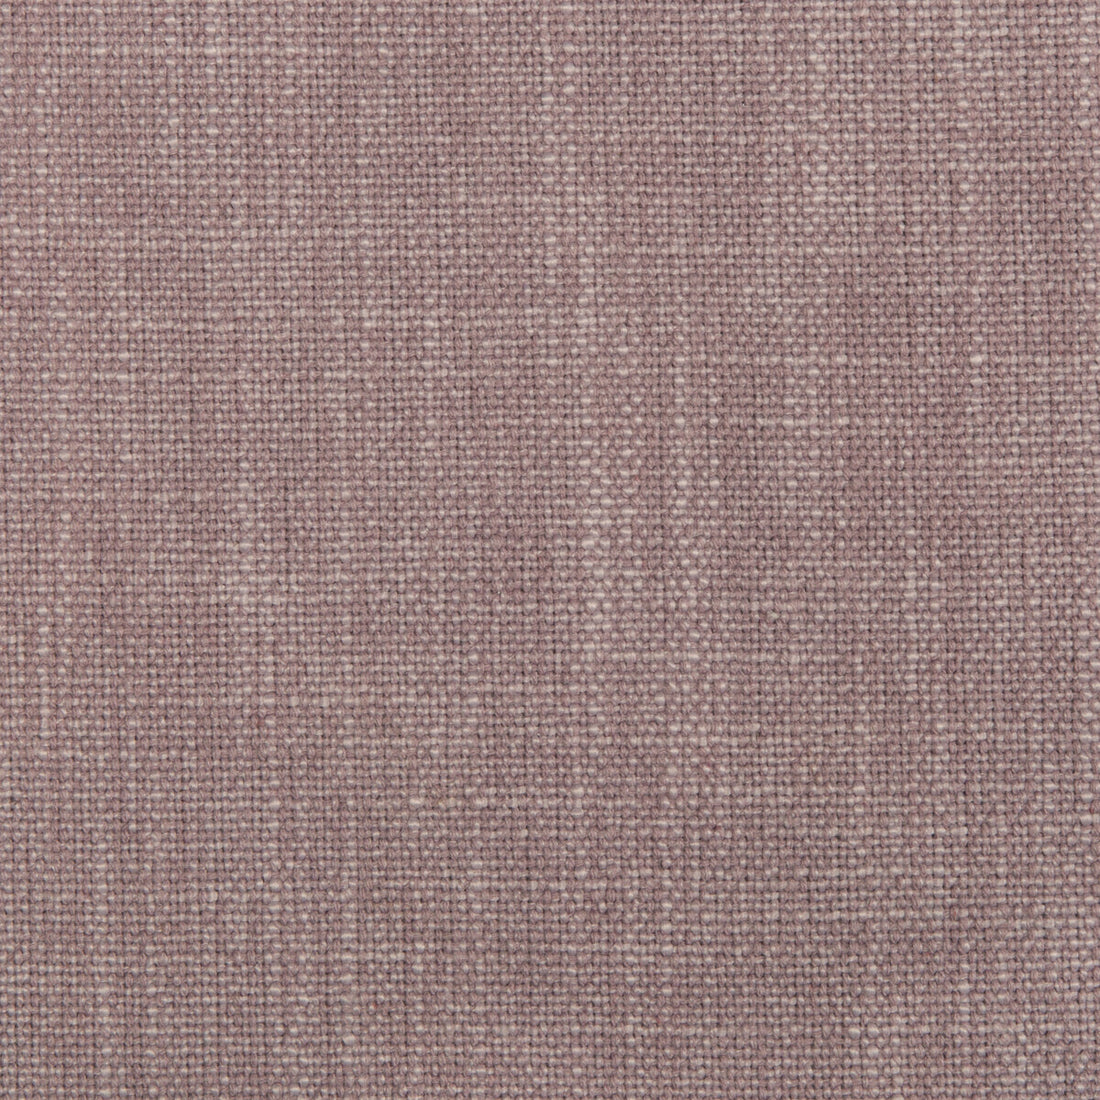 Kravet Smart fabric in 35226-10 color - pattern 35226.10.0 - by Kravet Smart in the Performance Kravetarmor collection